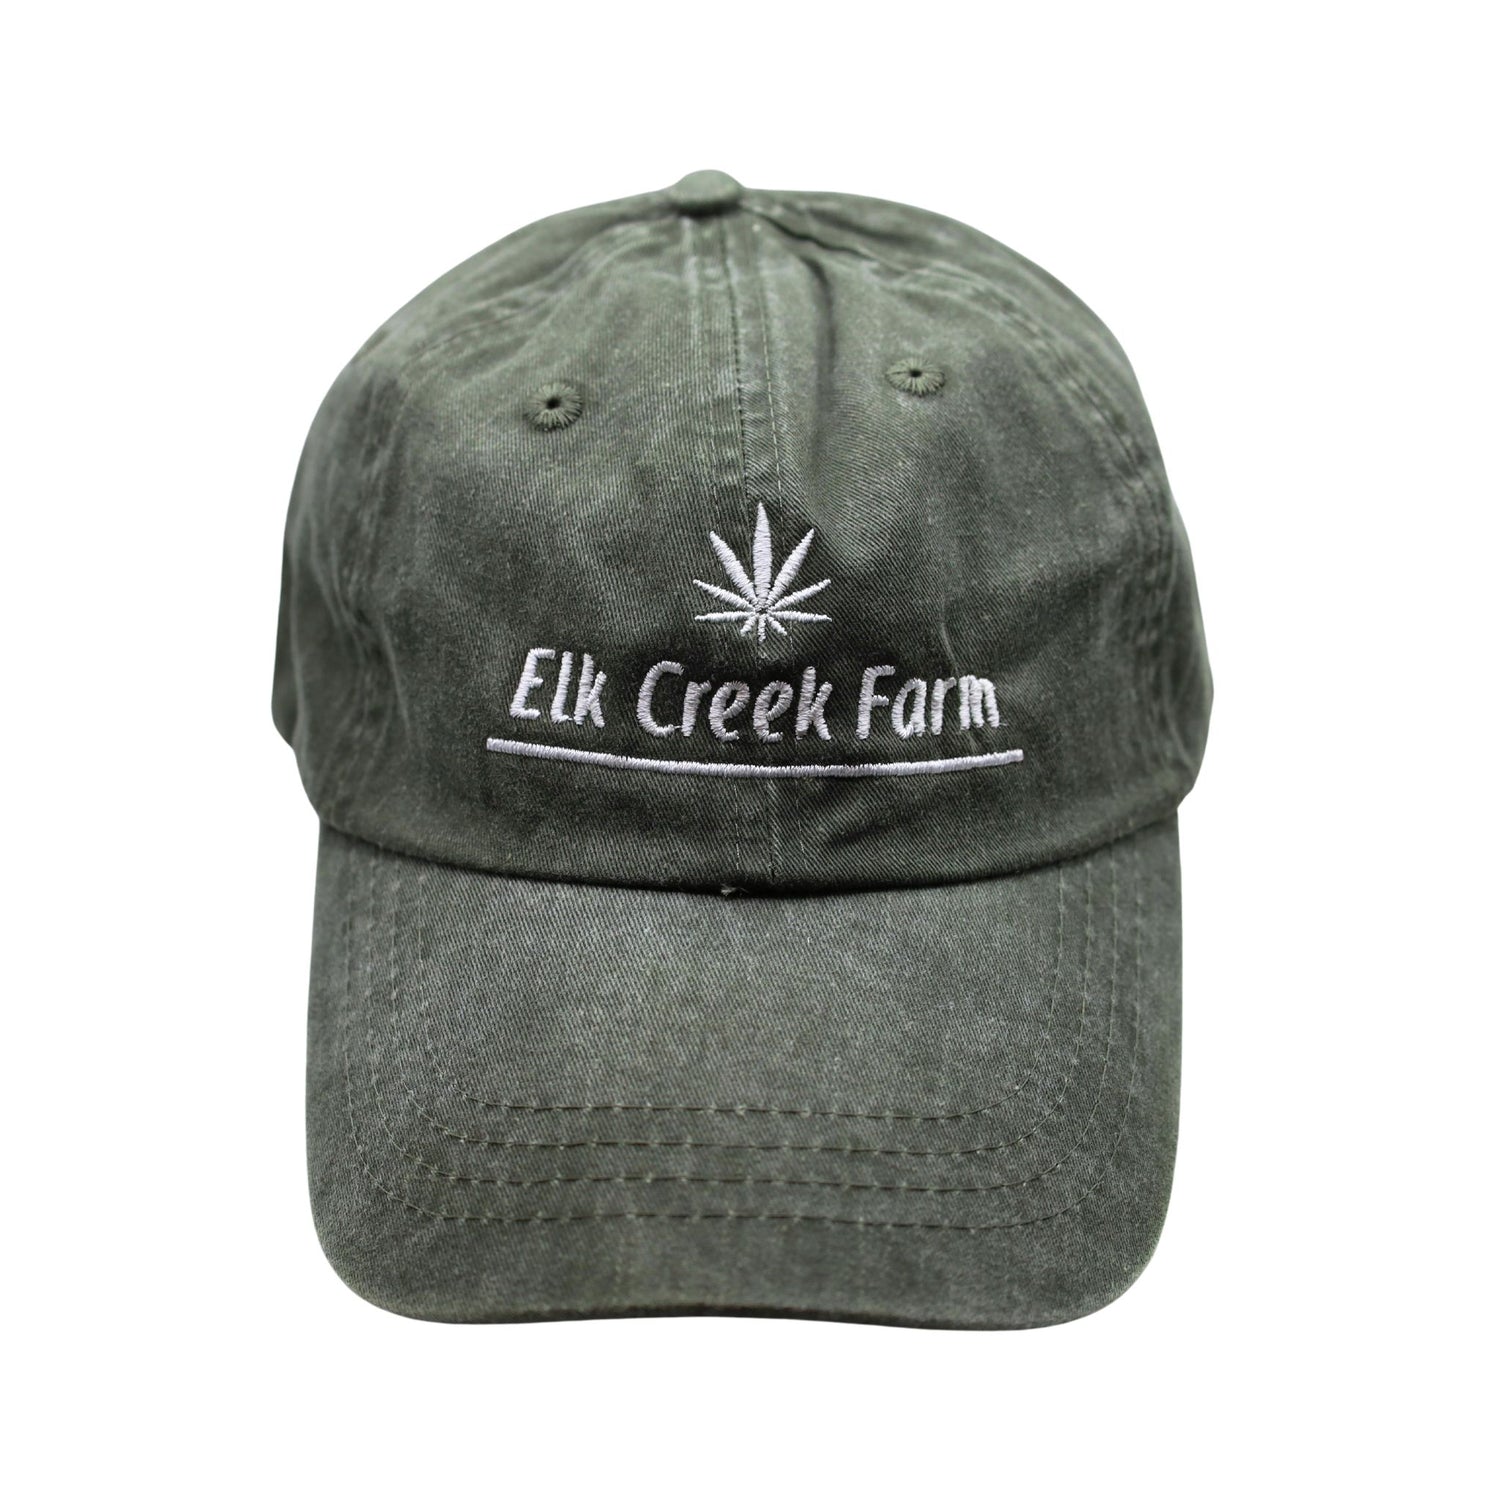 An elk creek farm branded cap. 